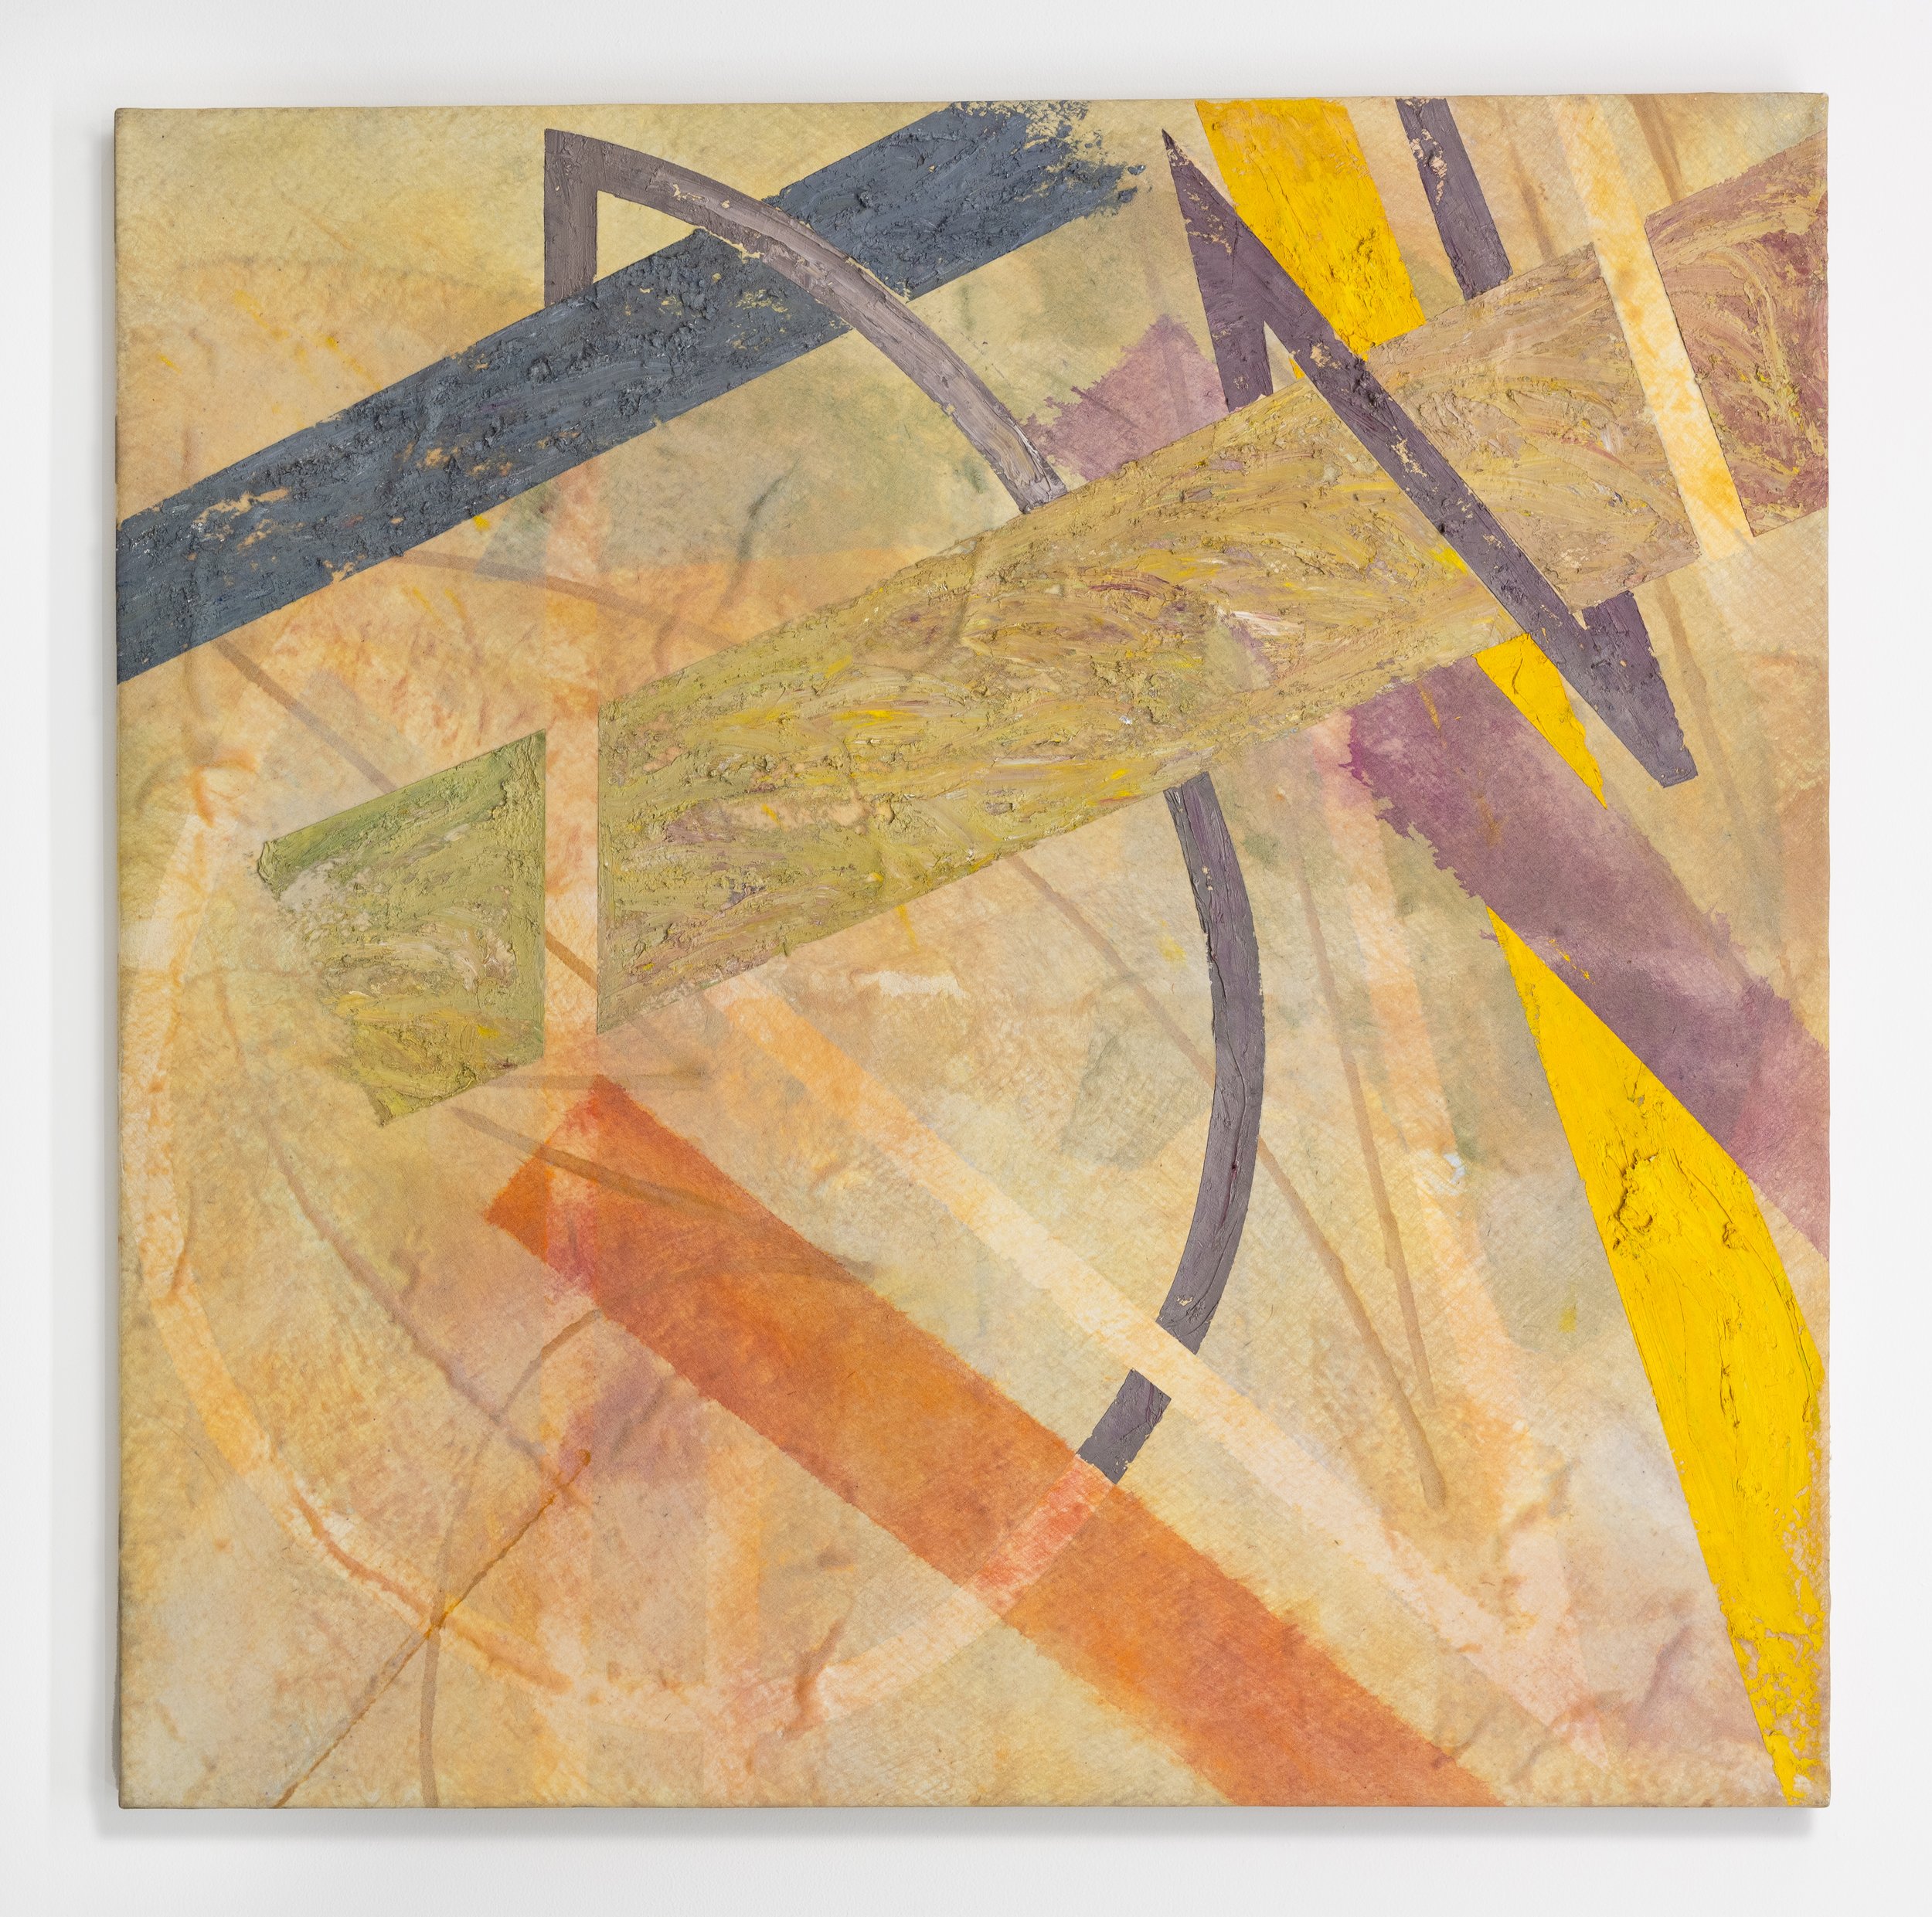   Untitled (178 Prince) , c. 1980 oil, acrylic, Fiberglass on canvas 48 x 48 in&nbsp; (121.9 x 121.9 cm) 